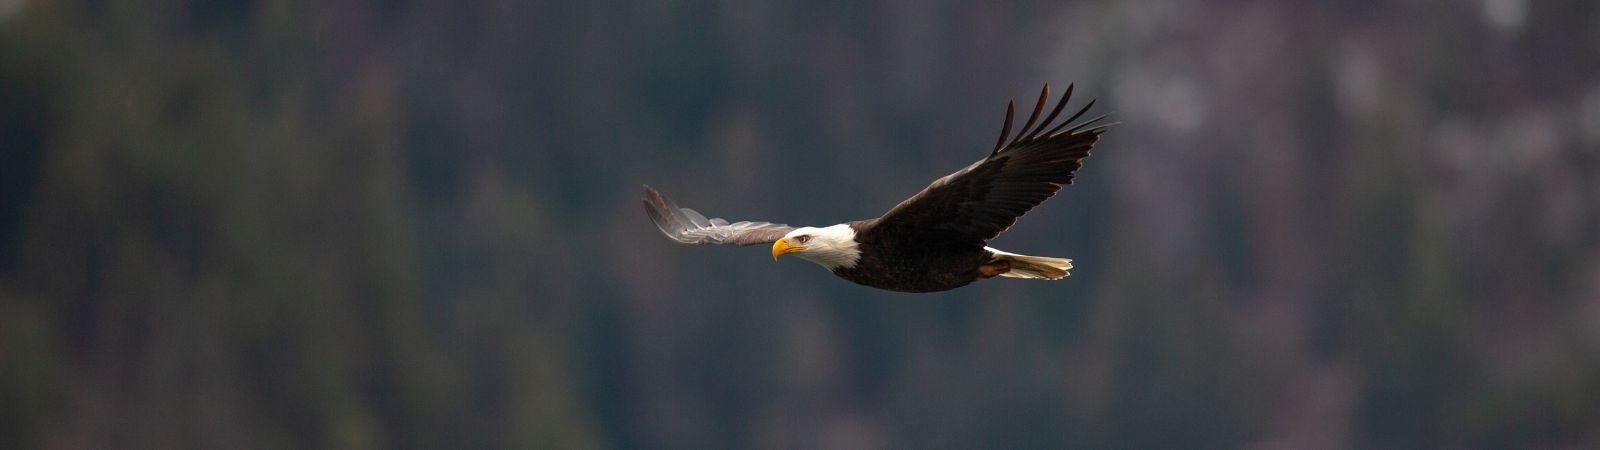 a bald eagle soaring through the air